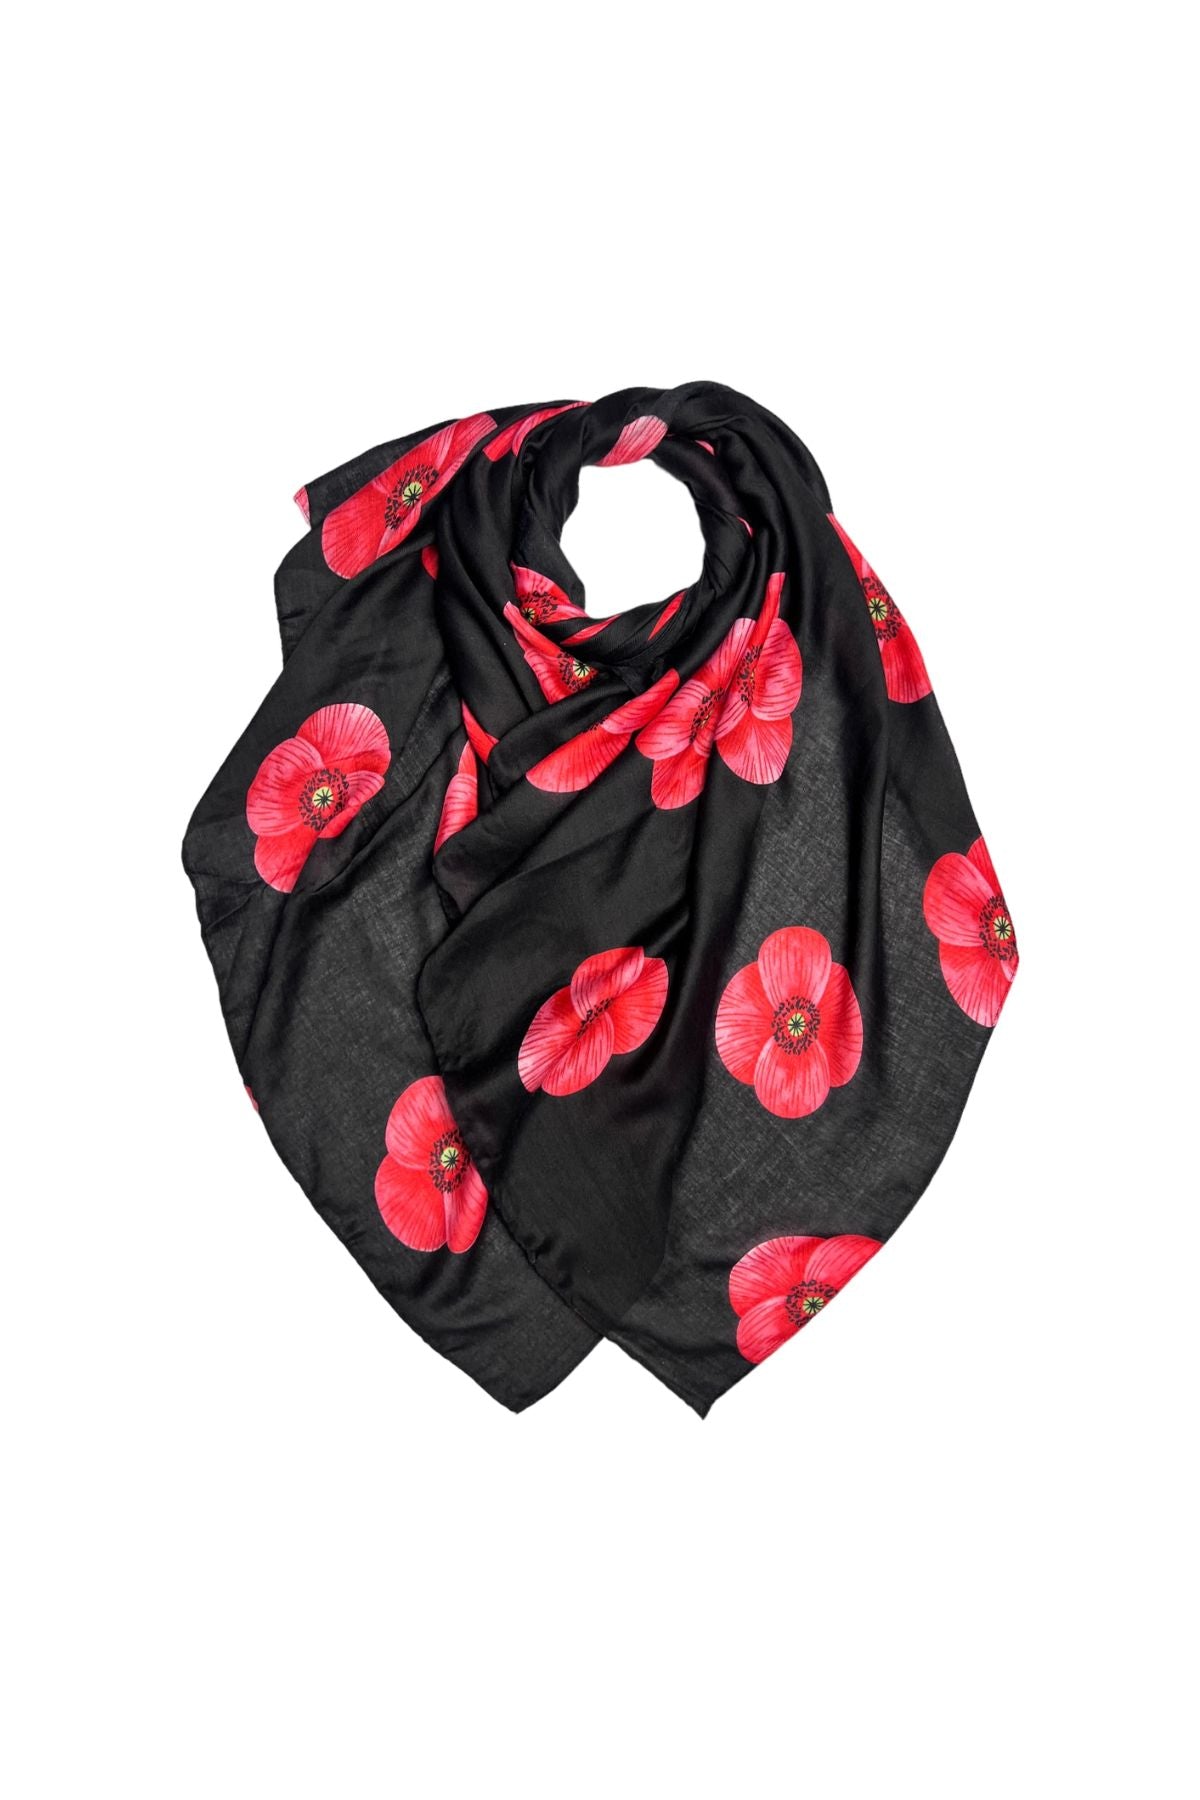 Black poppy print scarf